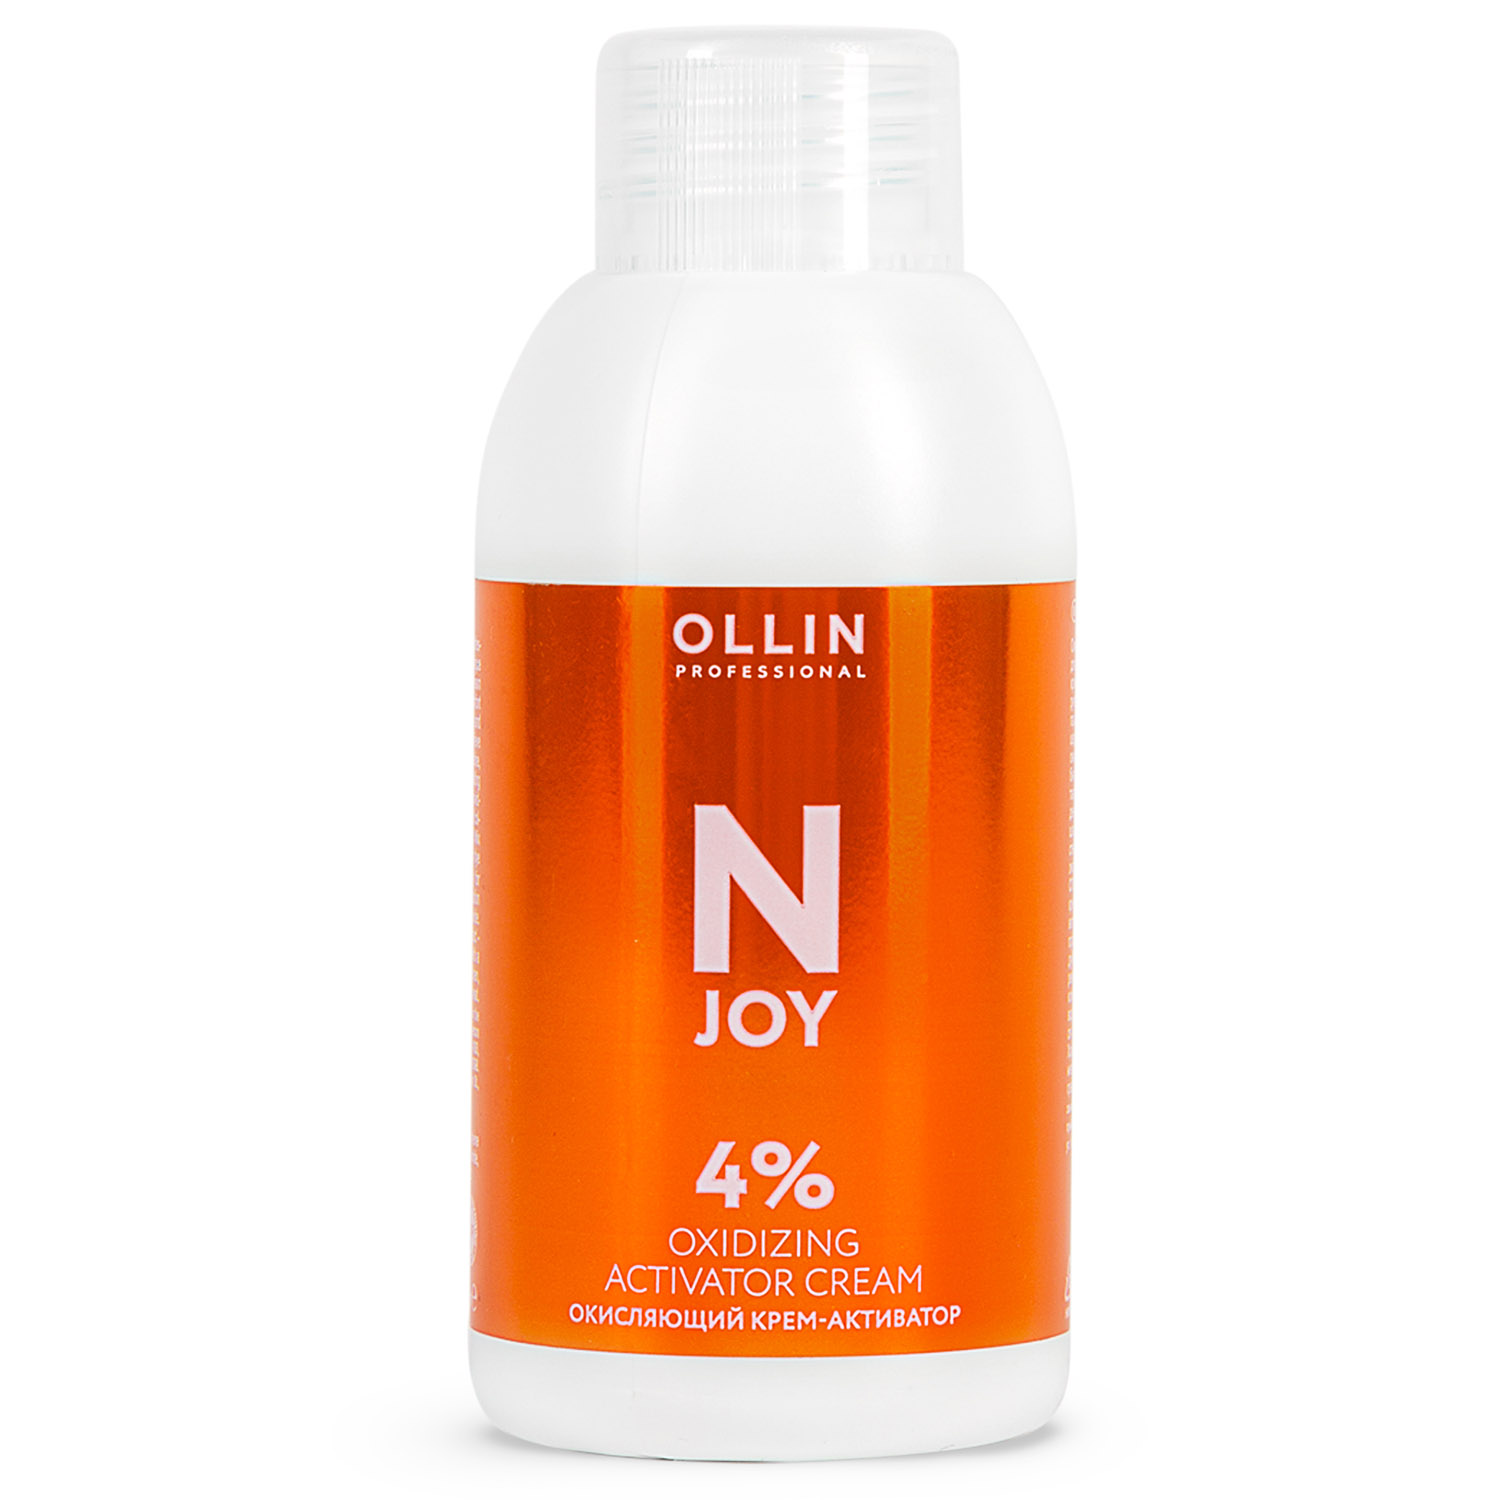 Ollin Professional Окисляющий крем-активатор 4%, 100 мл (Ollin Professional, N-Joy) ollin окисляющий крем активатор n joy 8% 1 л